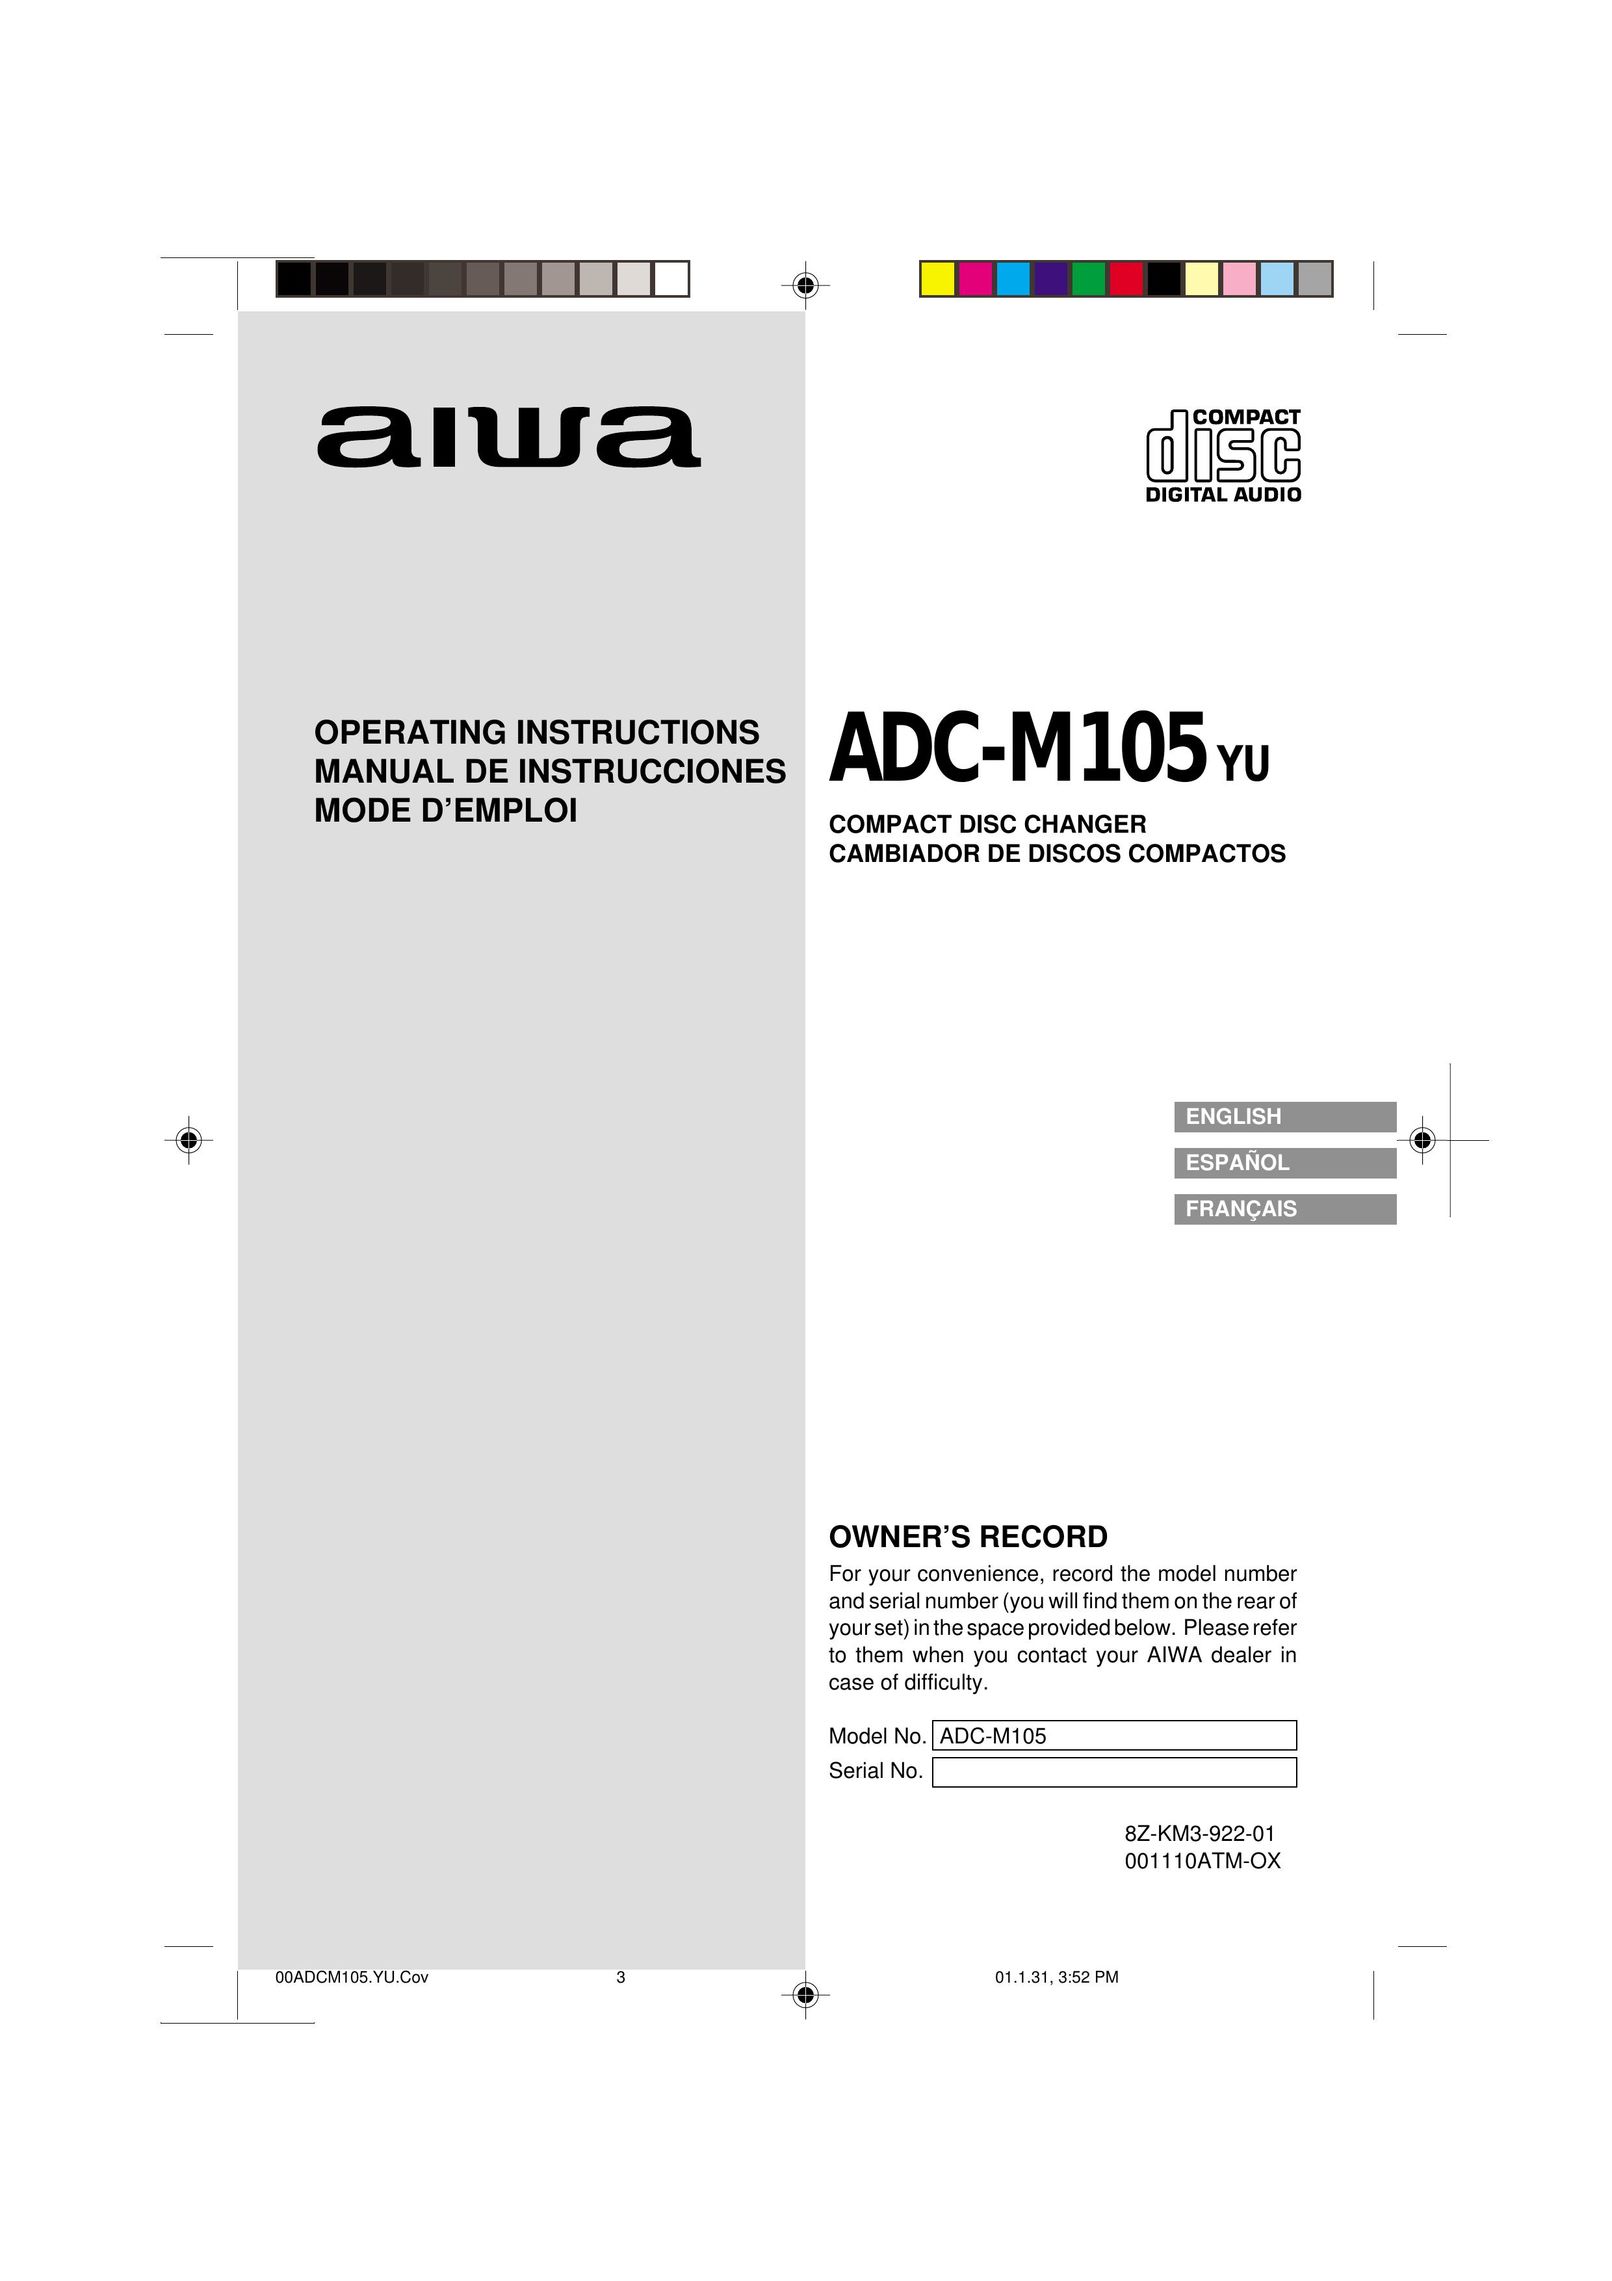 Aiwa ADC-M105 CD Player User Manual